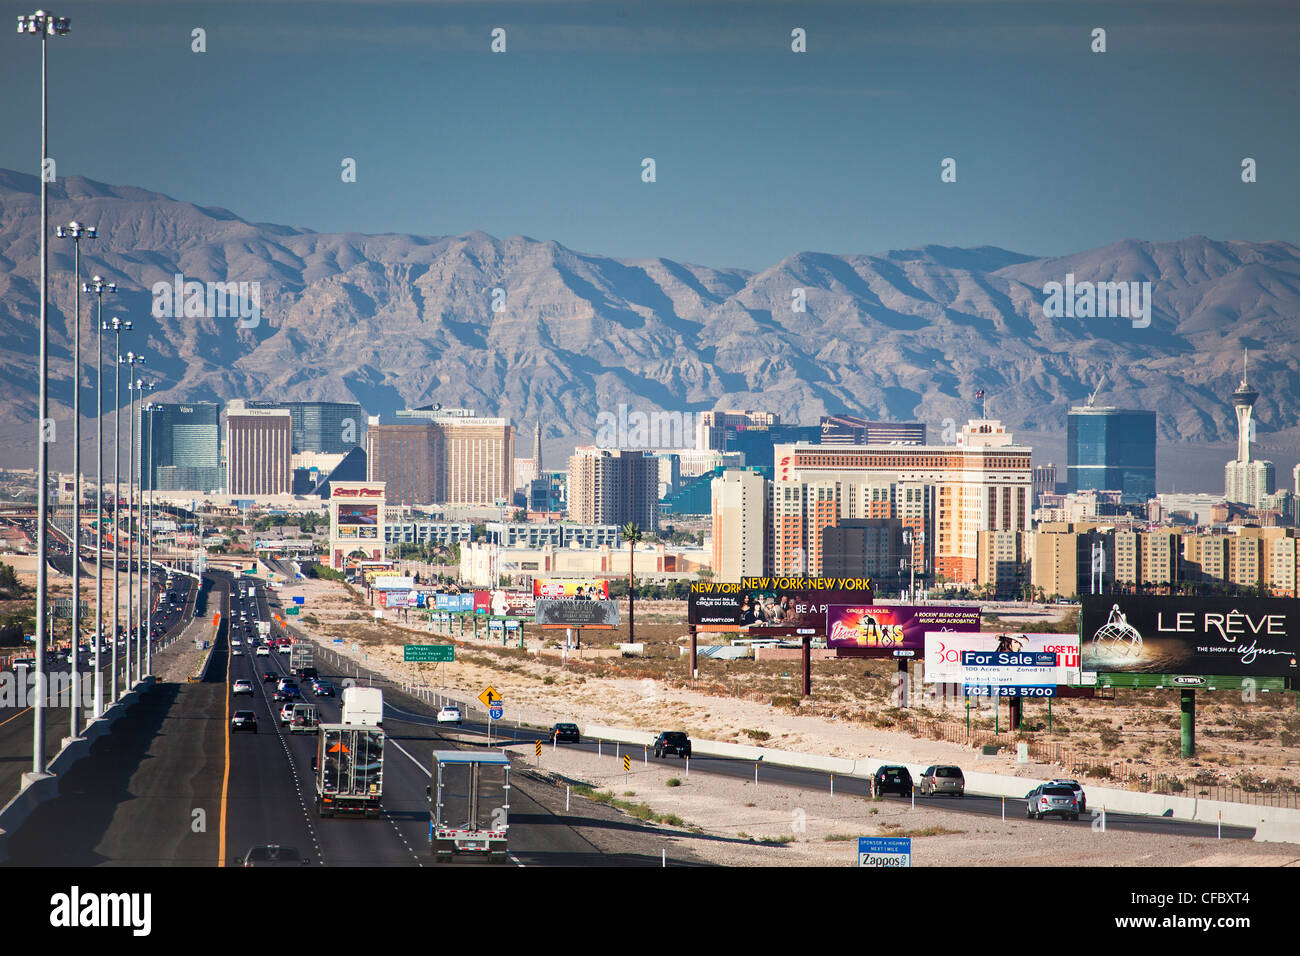 USA, USA, Amerika, Nevada, Las Vegas, Stadt, Hotel, Architektur, Attraktion, hell, bunt, anders, trocken, berühmt Stockfoto